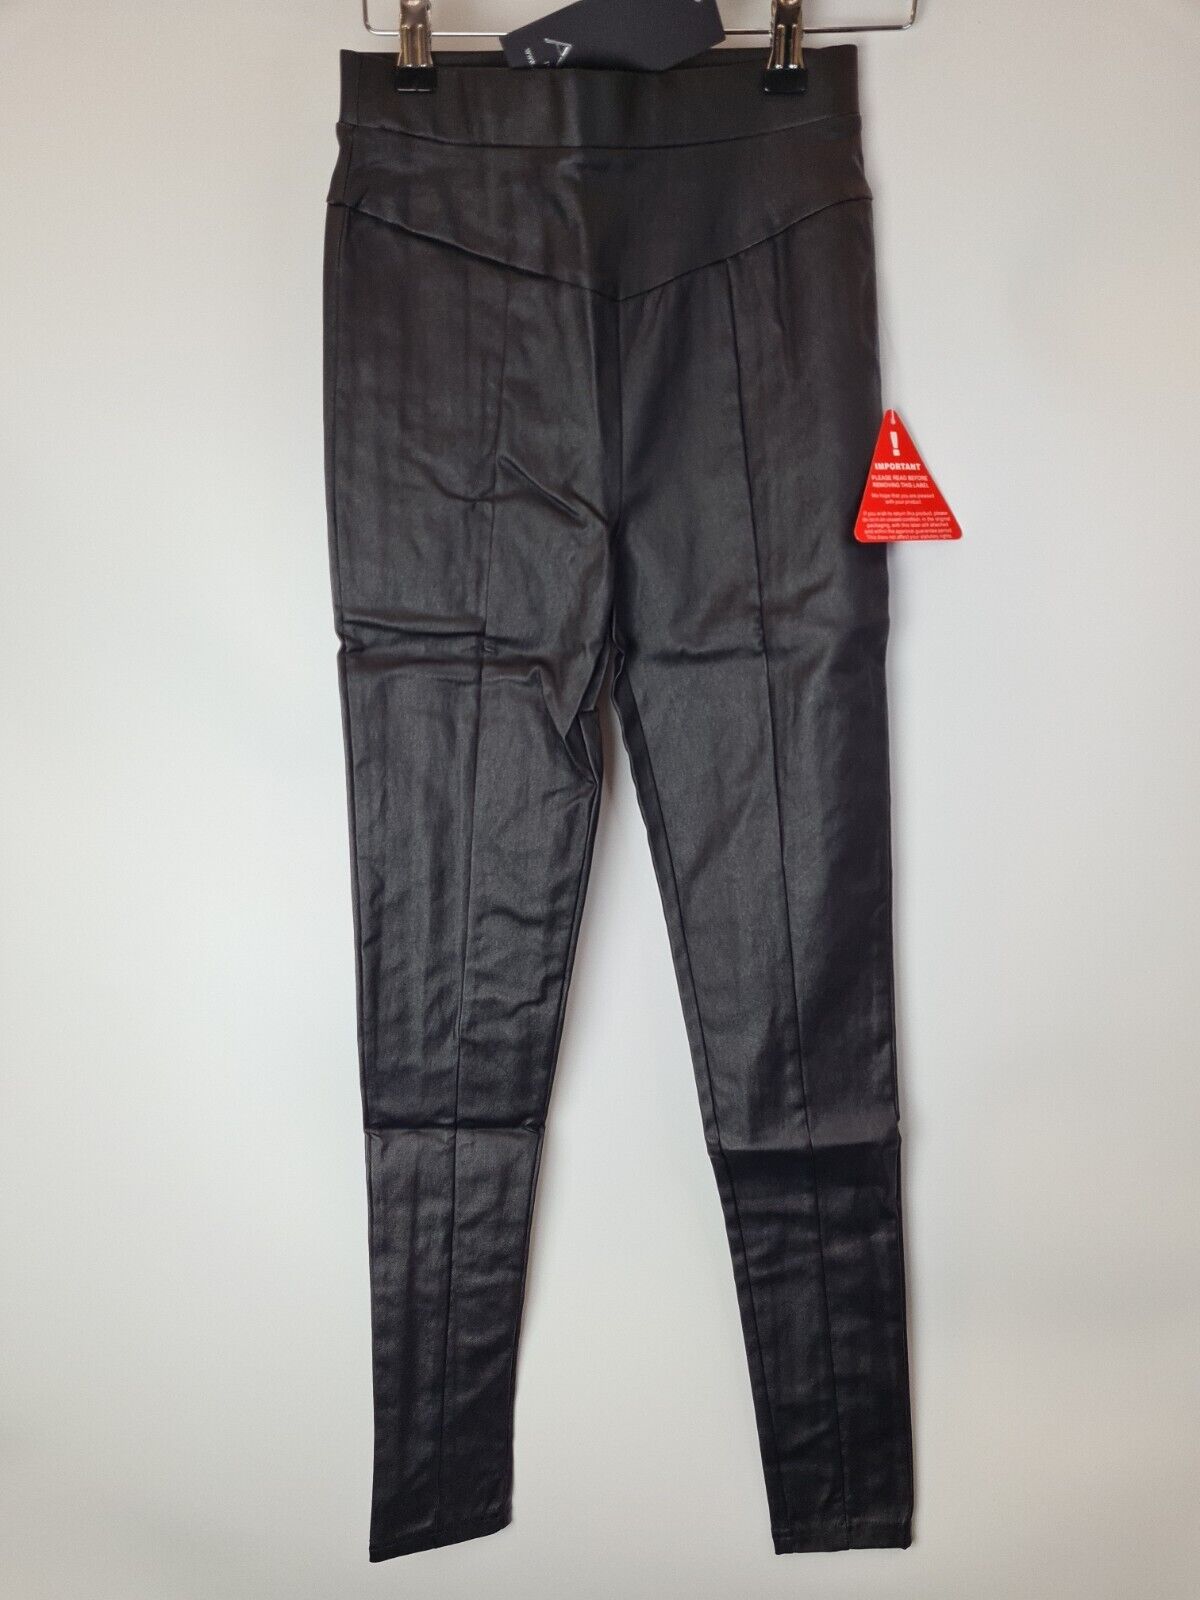 Ax Paris High Waisted Faux Leather Black Leggings Size UK 6 **** V522